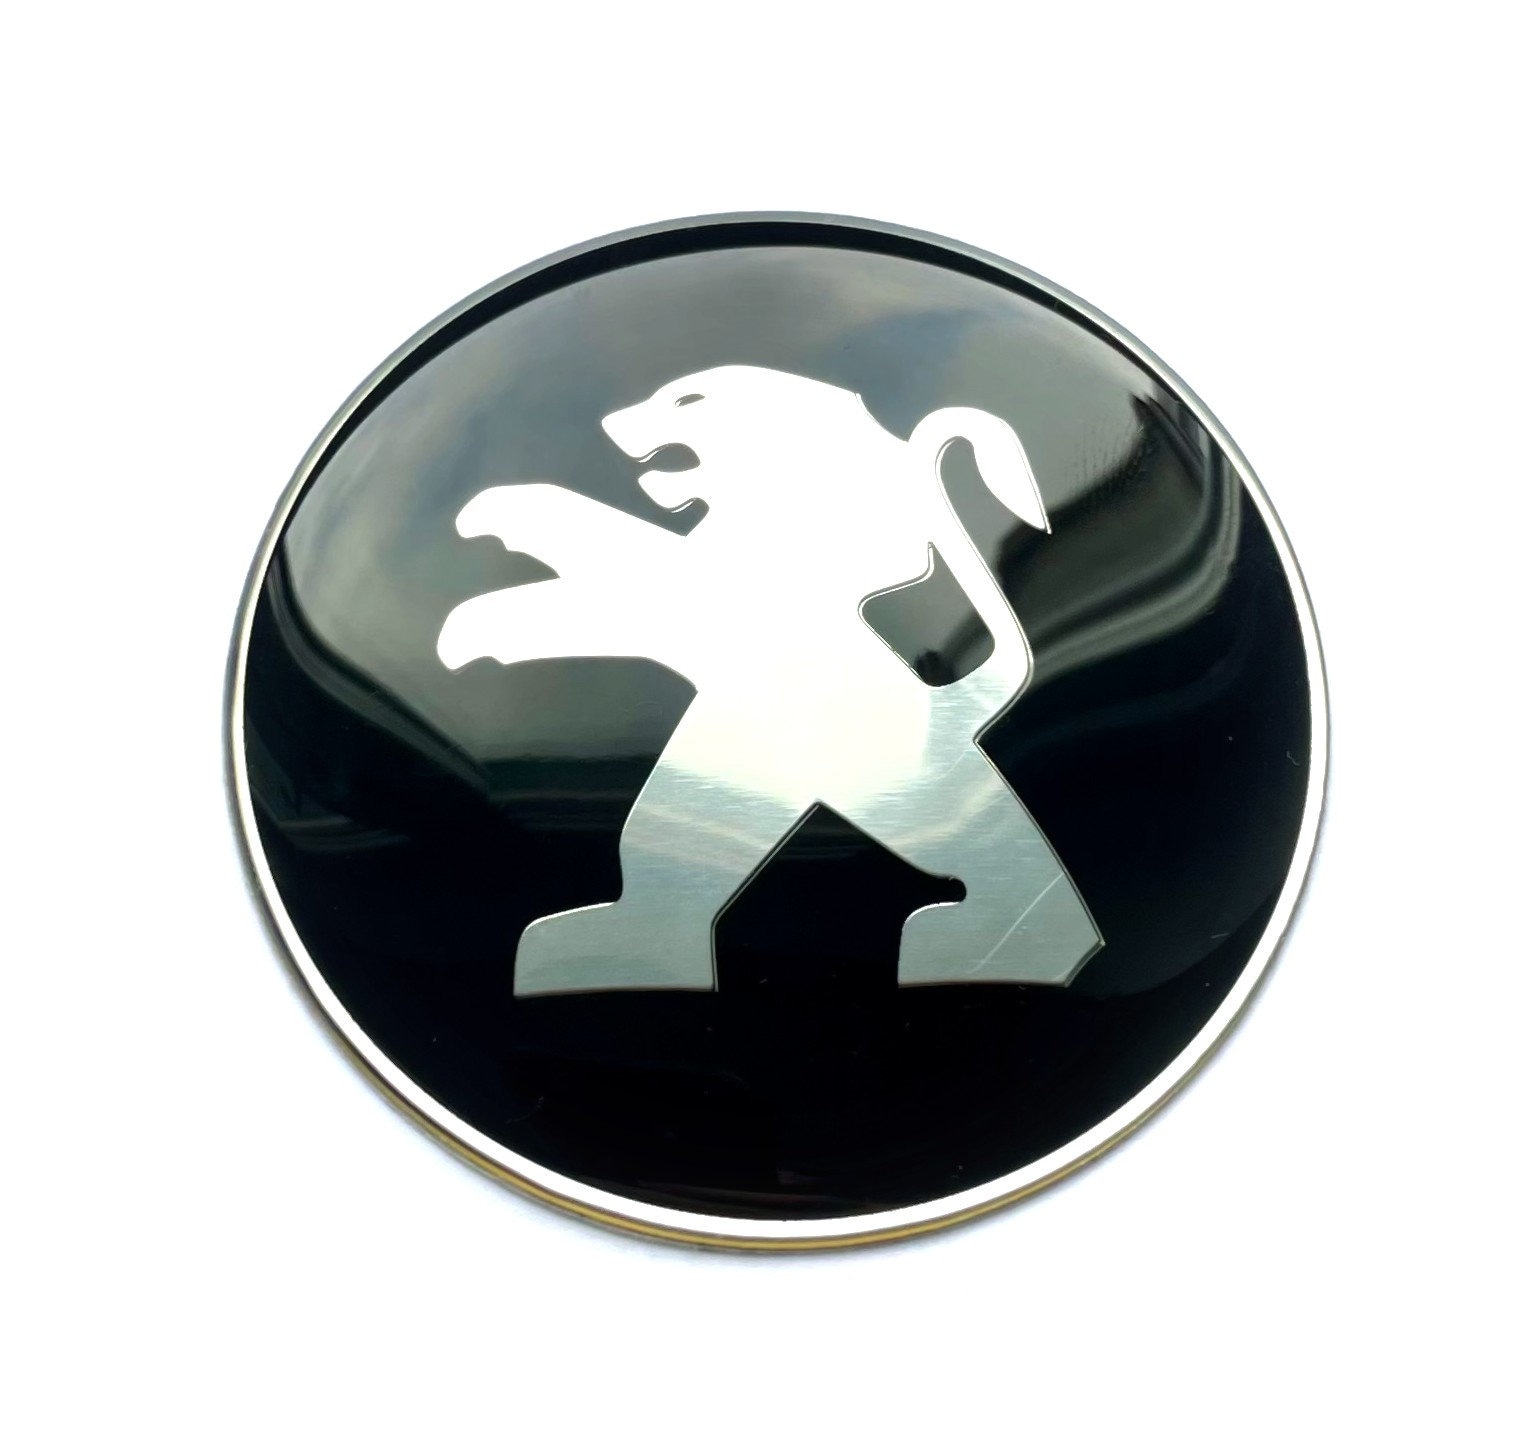 1 x Peugeot Logo 3D Metal Car Badge Sticker Emblem Decal for Peugeot 206  207 2008 301 307 308 3008 407 408 4008 508 5008 etc. (4*4cm)